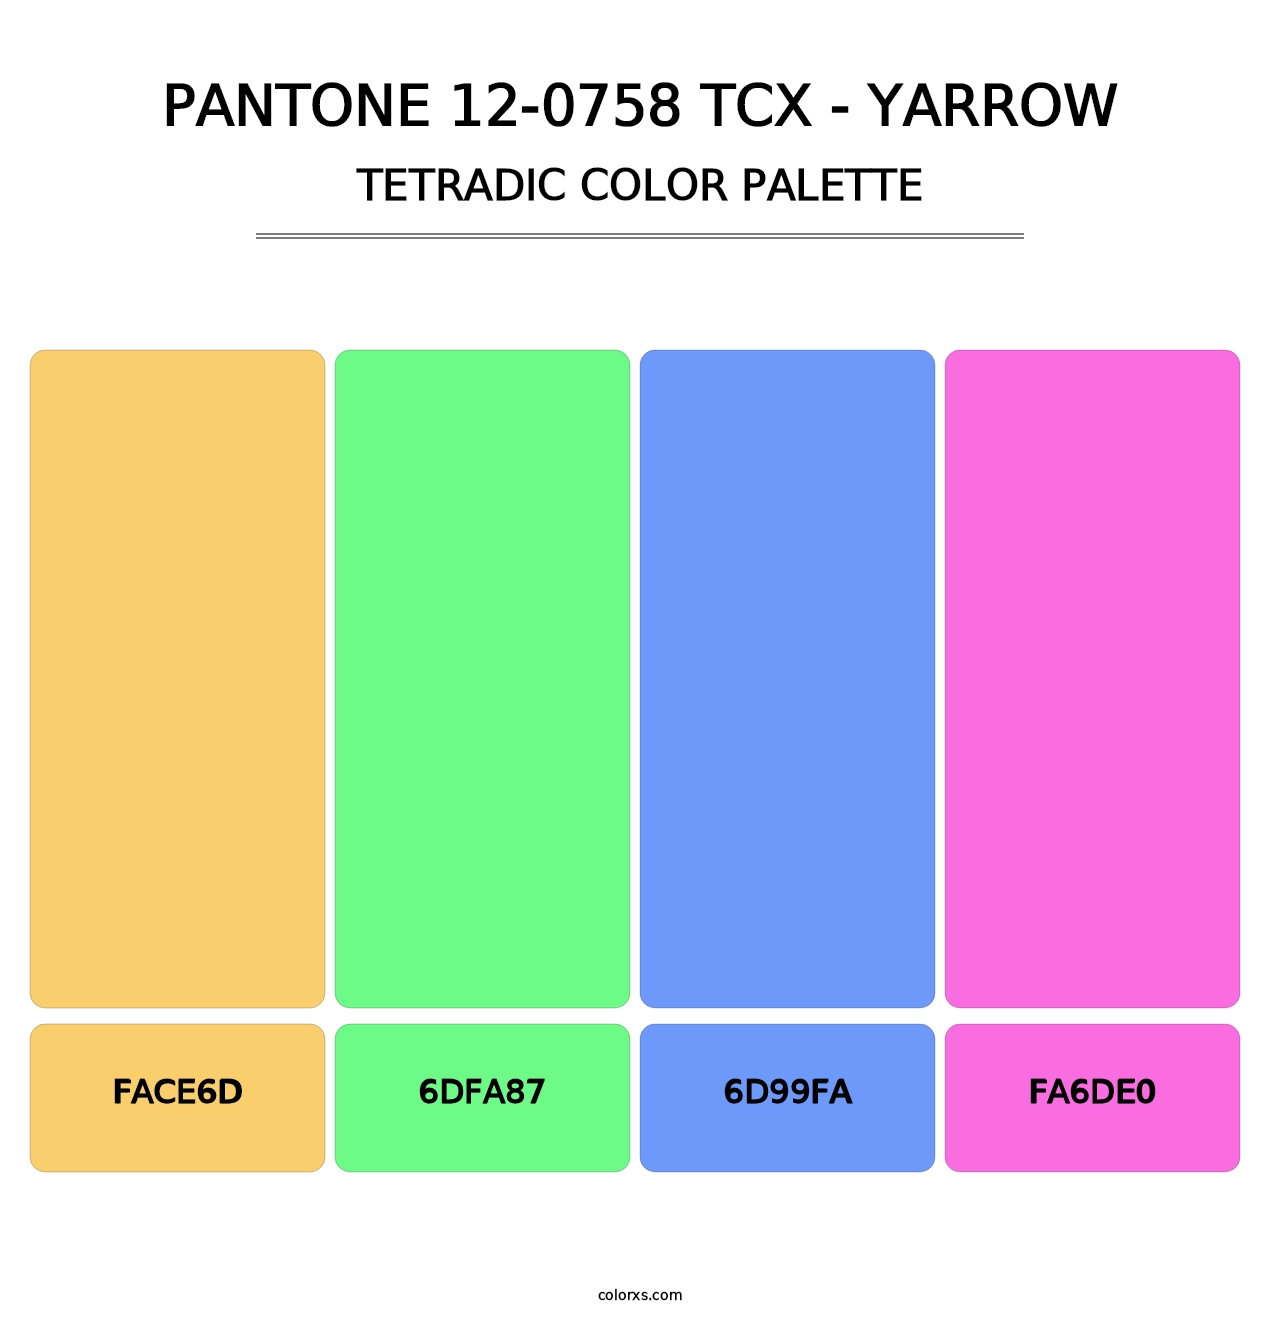 PANTONE 12-0758 TCX - Yarrow - Tetradic Color Palette